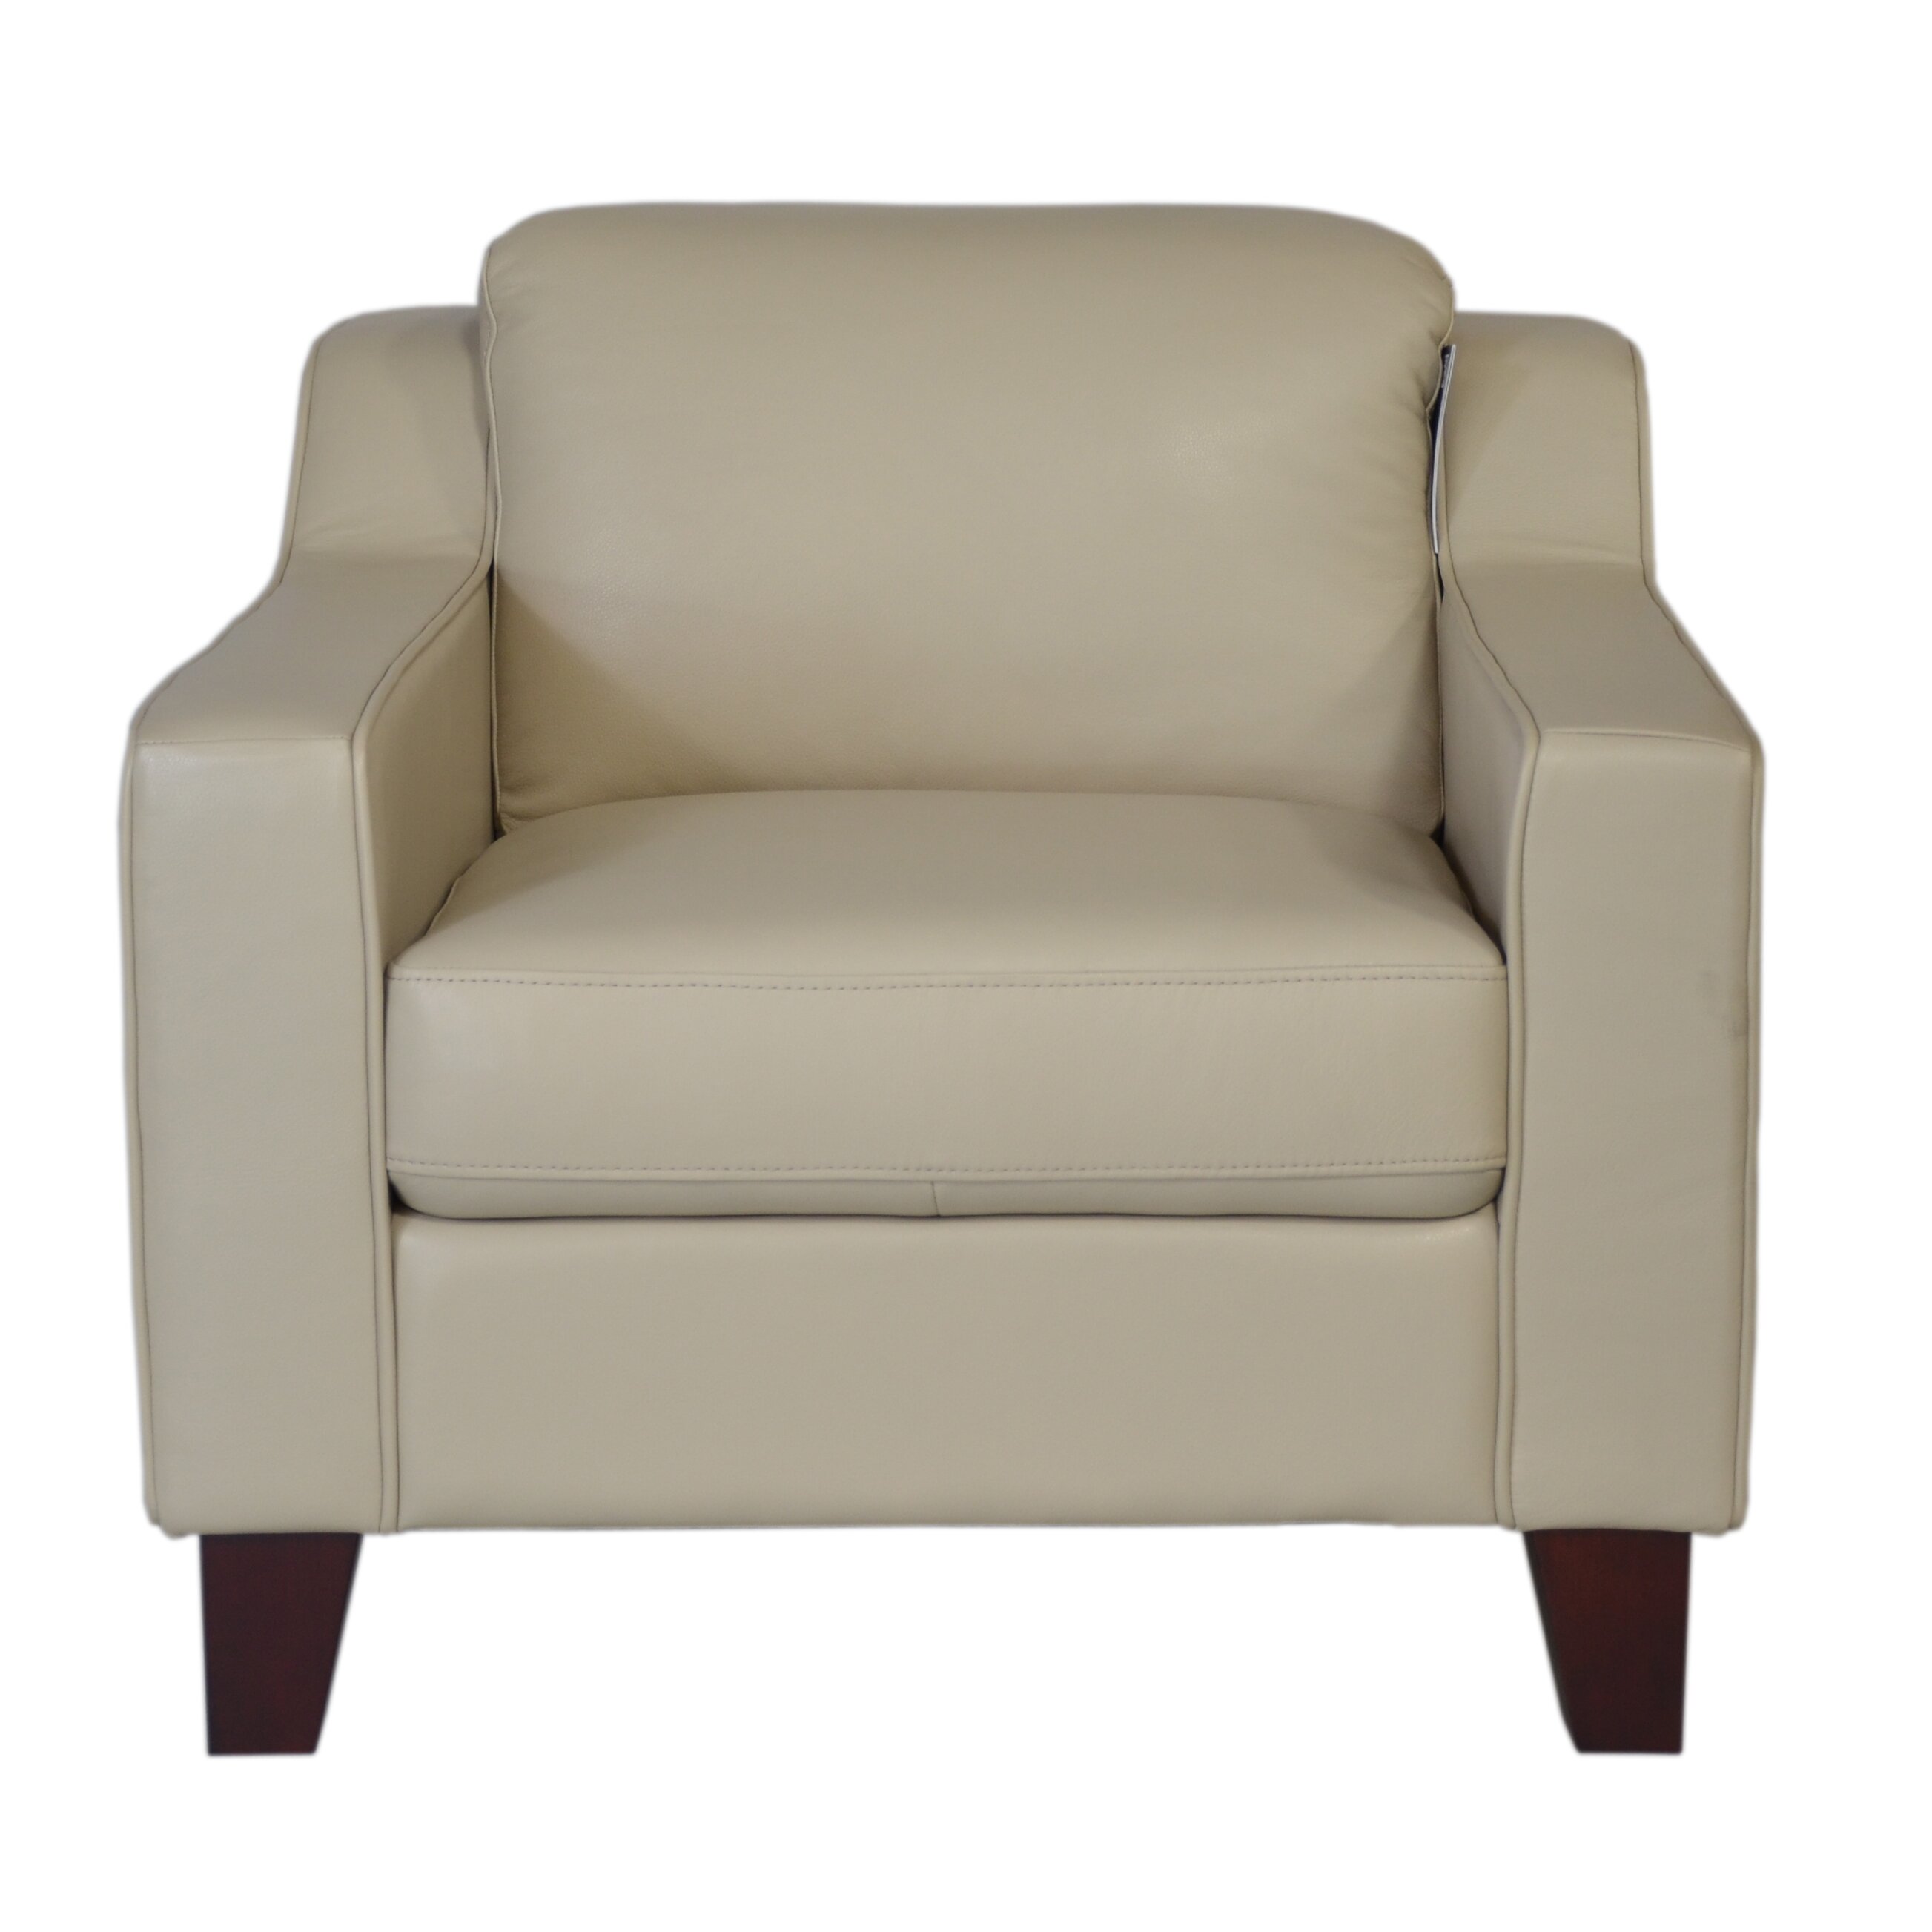 Moroni Cora Full Top Grain Leather Chair | Wayfair